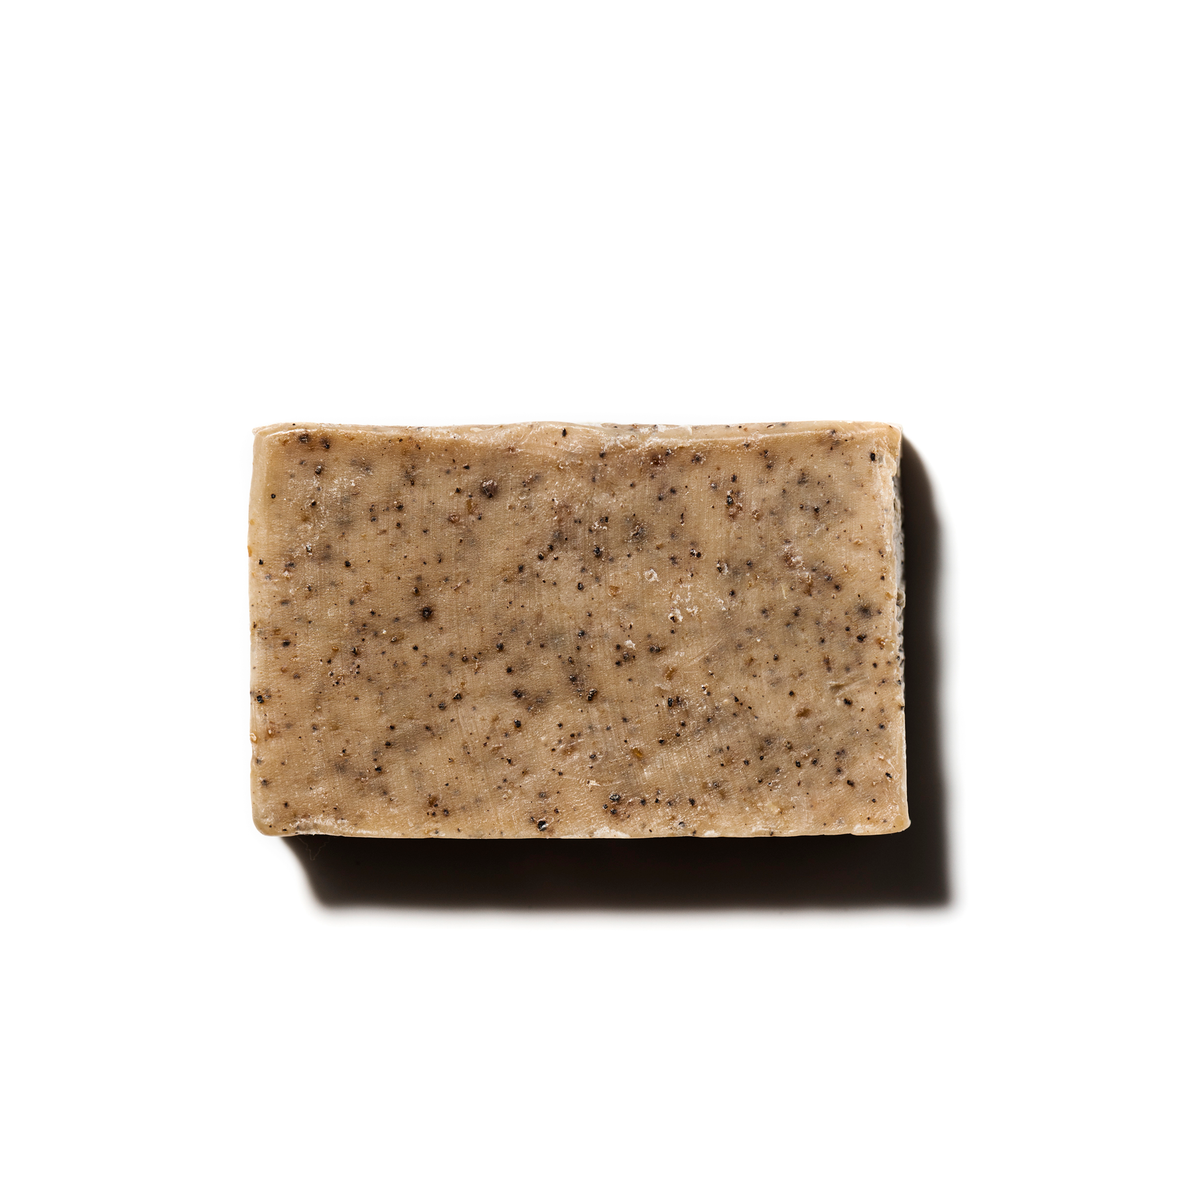 Morning Glory | Coffee Scrub Bar Soap: Wrapped - The Unoriginal Bathroom Co.